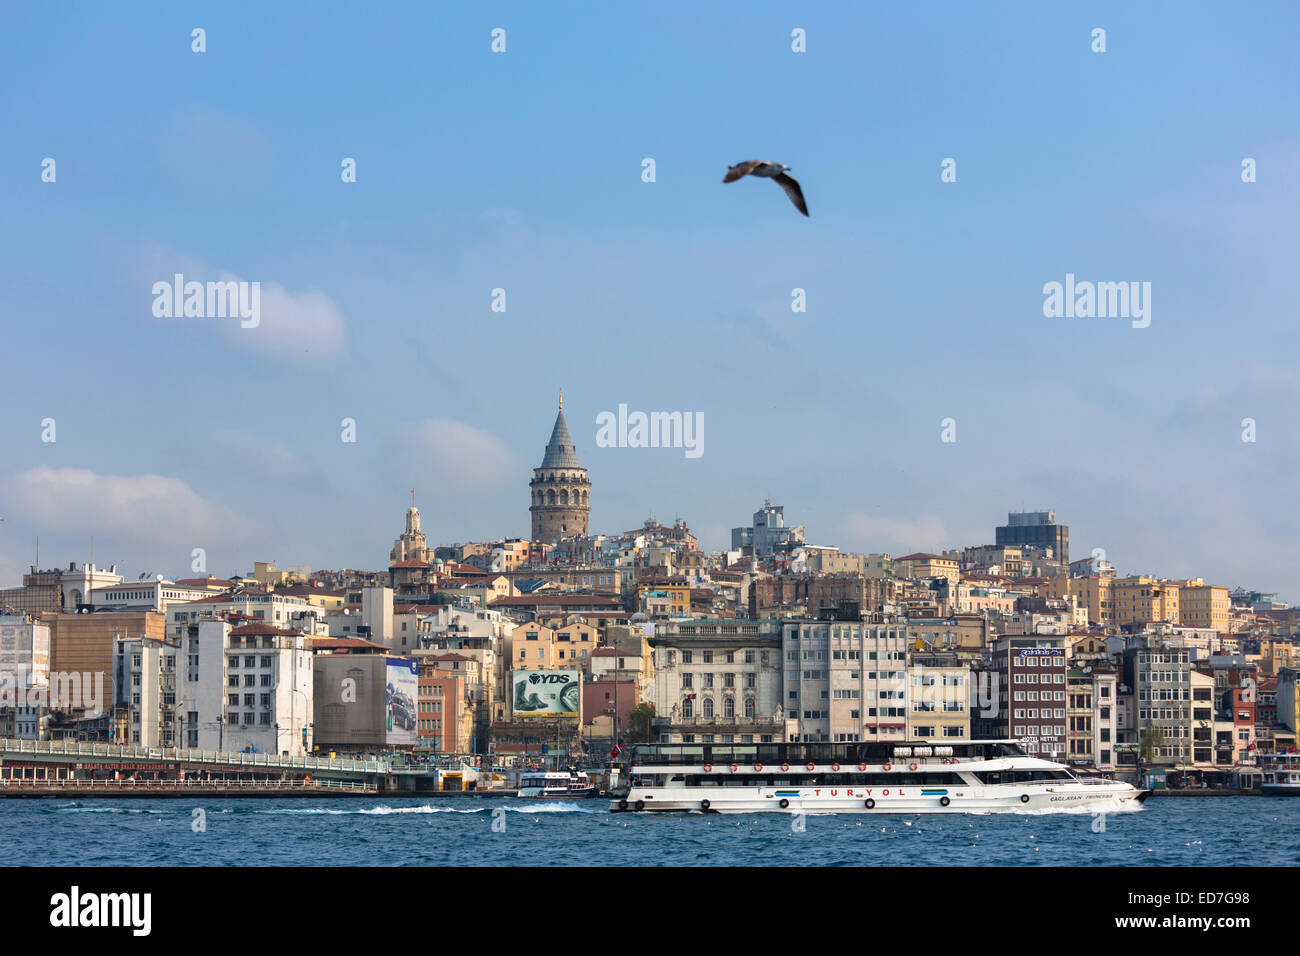 Skyline cityscape of Karakoy, Galata Tower and Beyoglu with ferry boat on Bosphorus River, Istanbul, Republic of Turkey Stock Photo